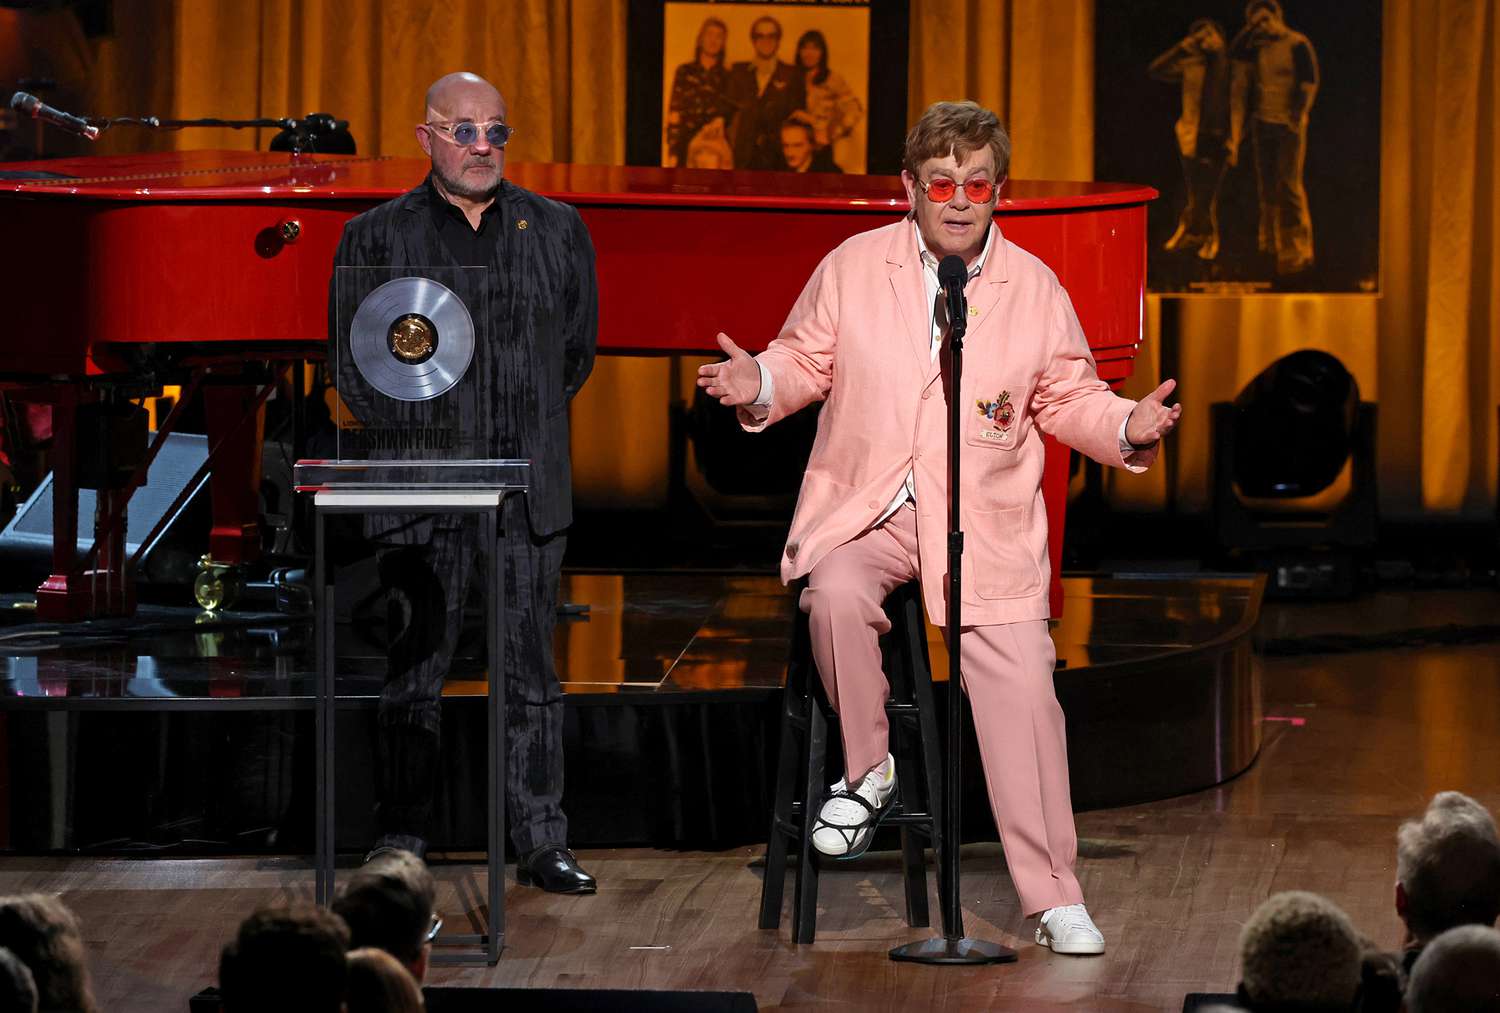 Honorees Bernie Taupin and Elton John